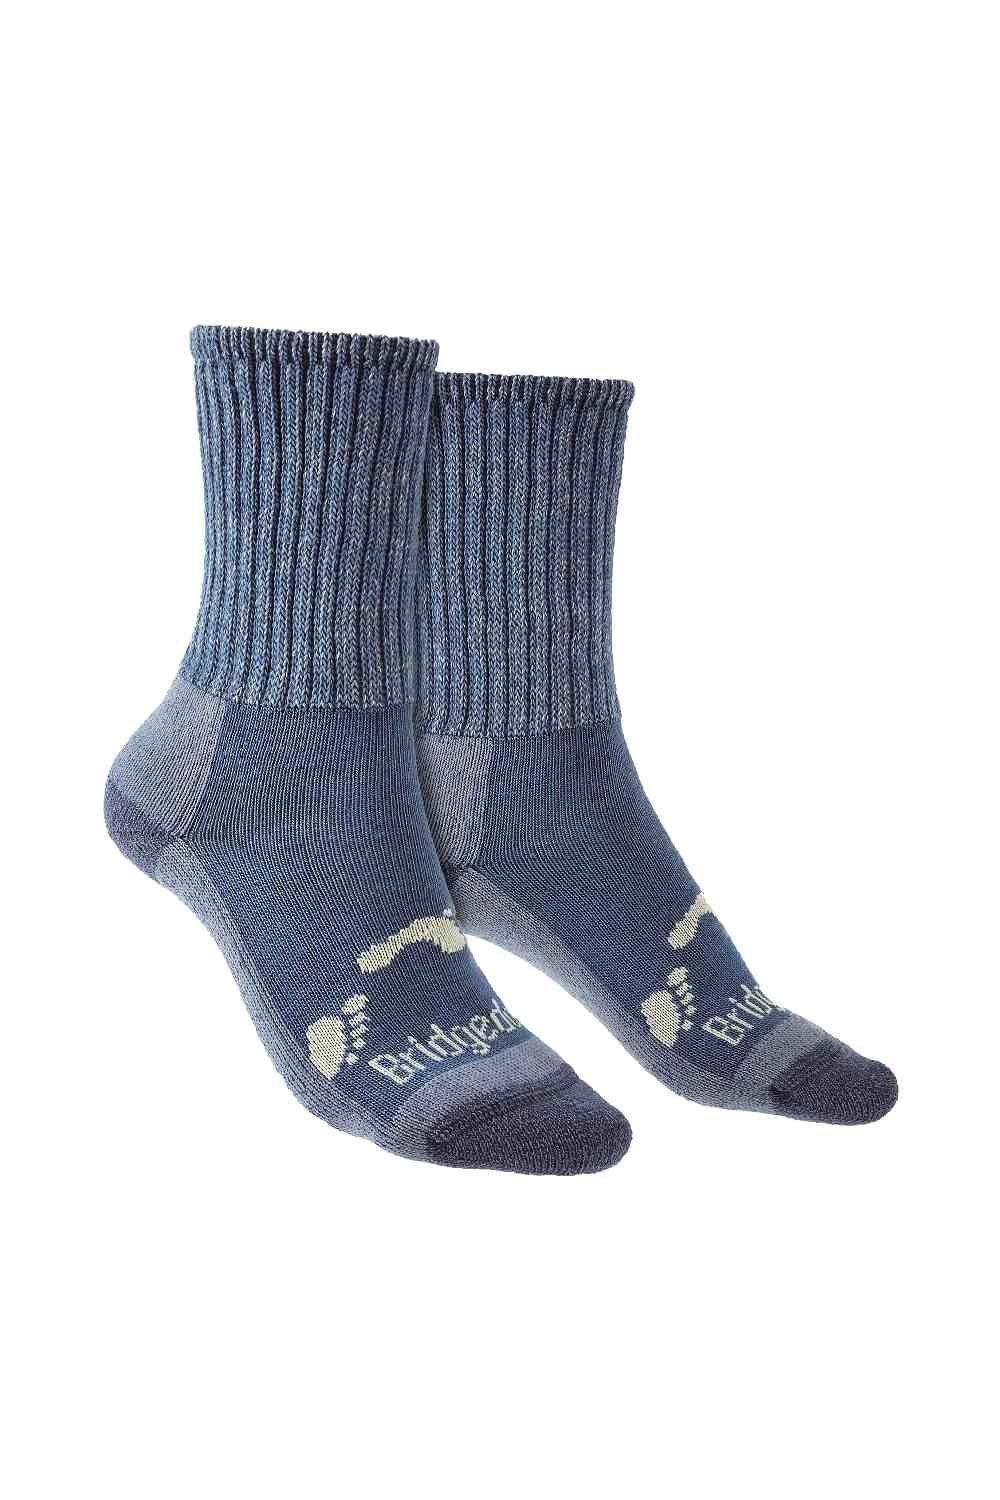 Merino Wool Boot Socks - Walking Hiking Outdoor Socks